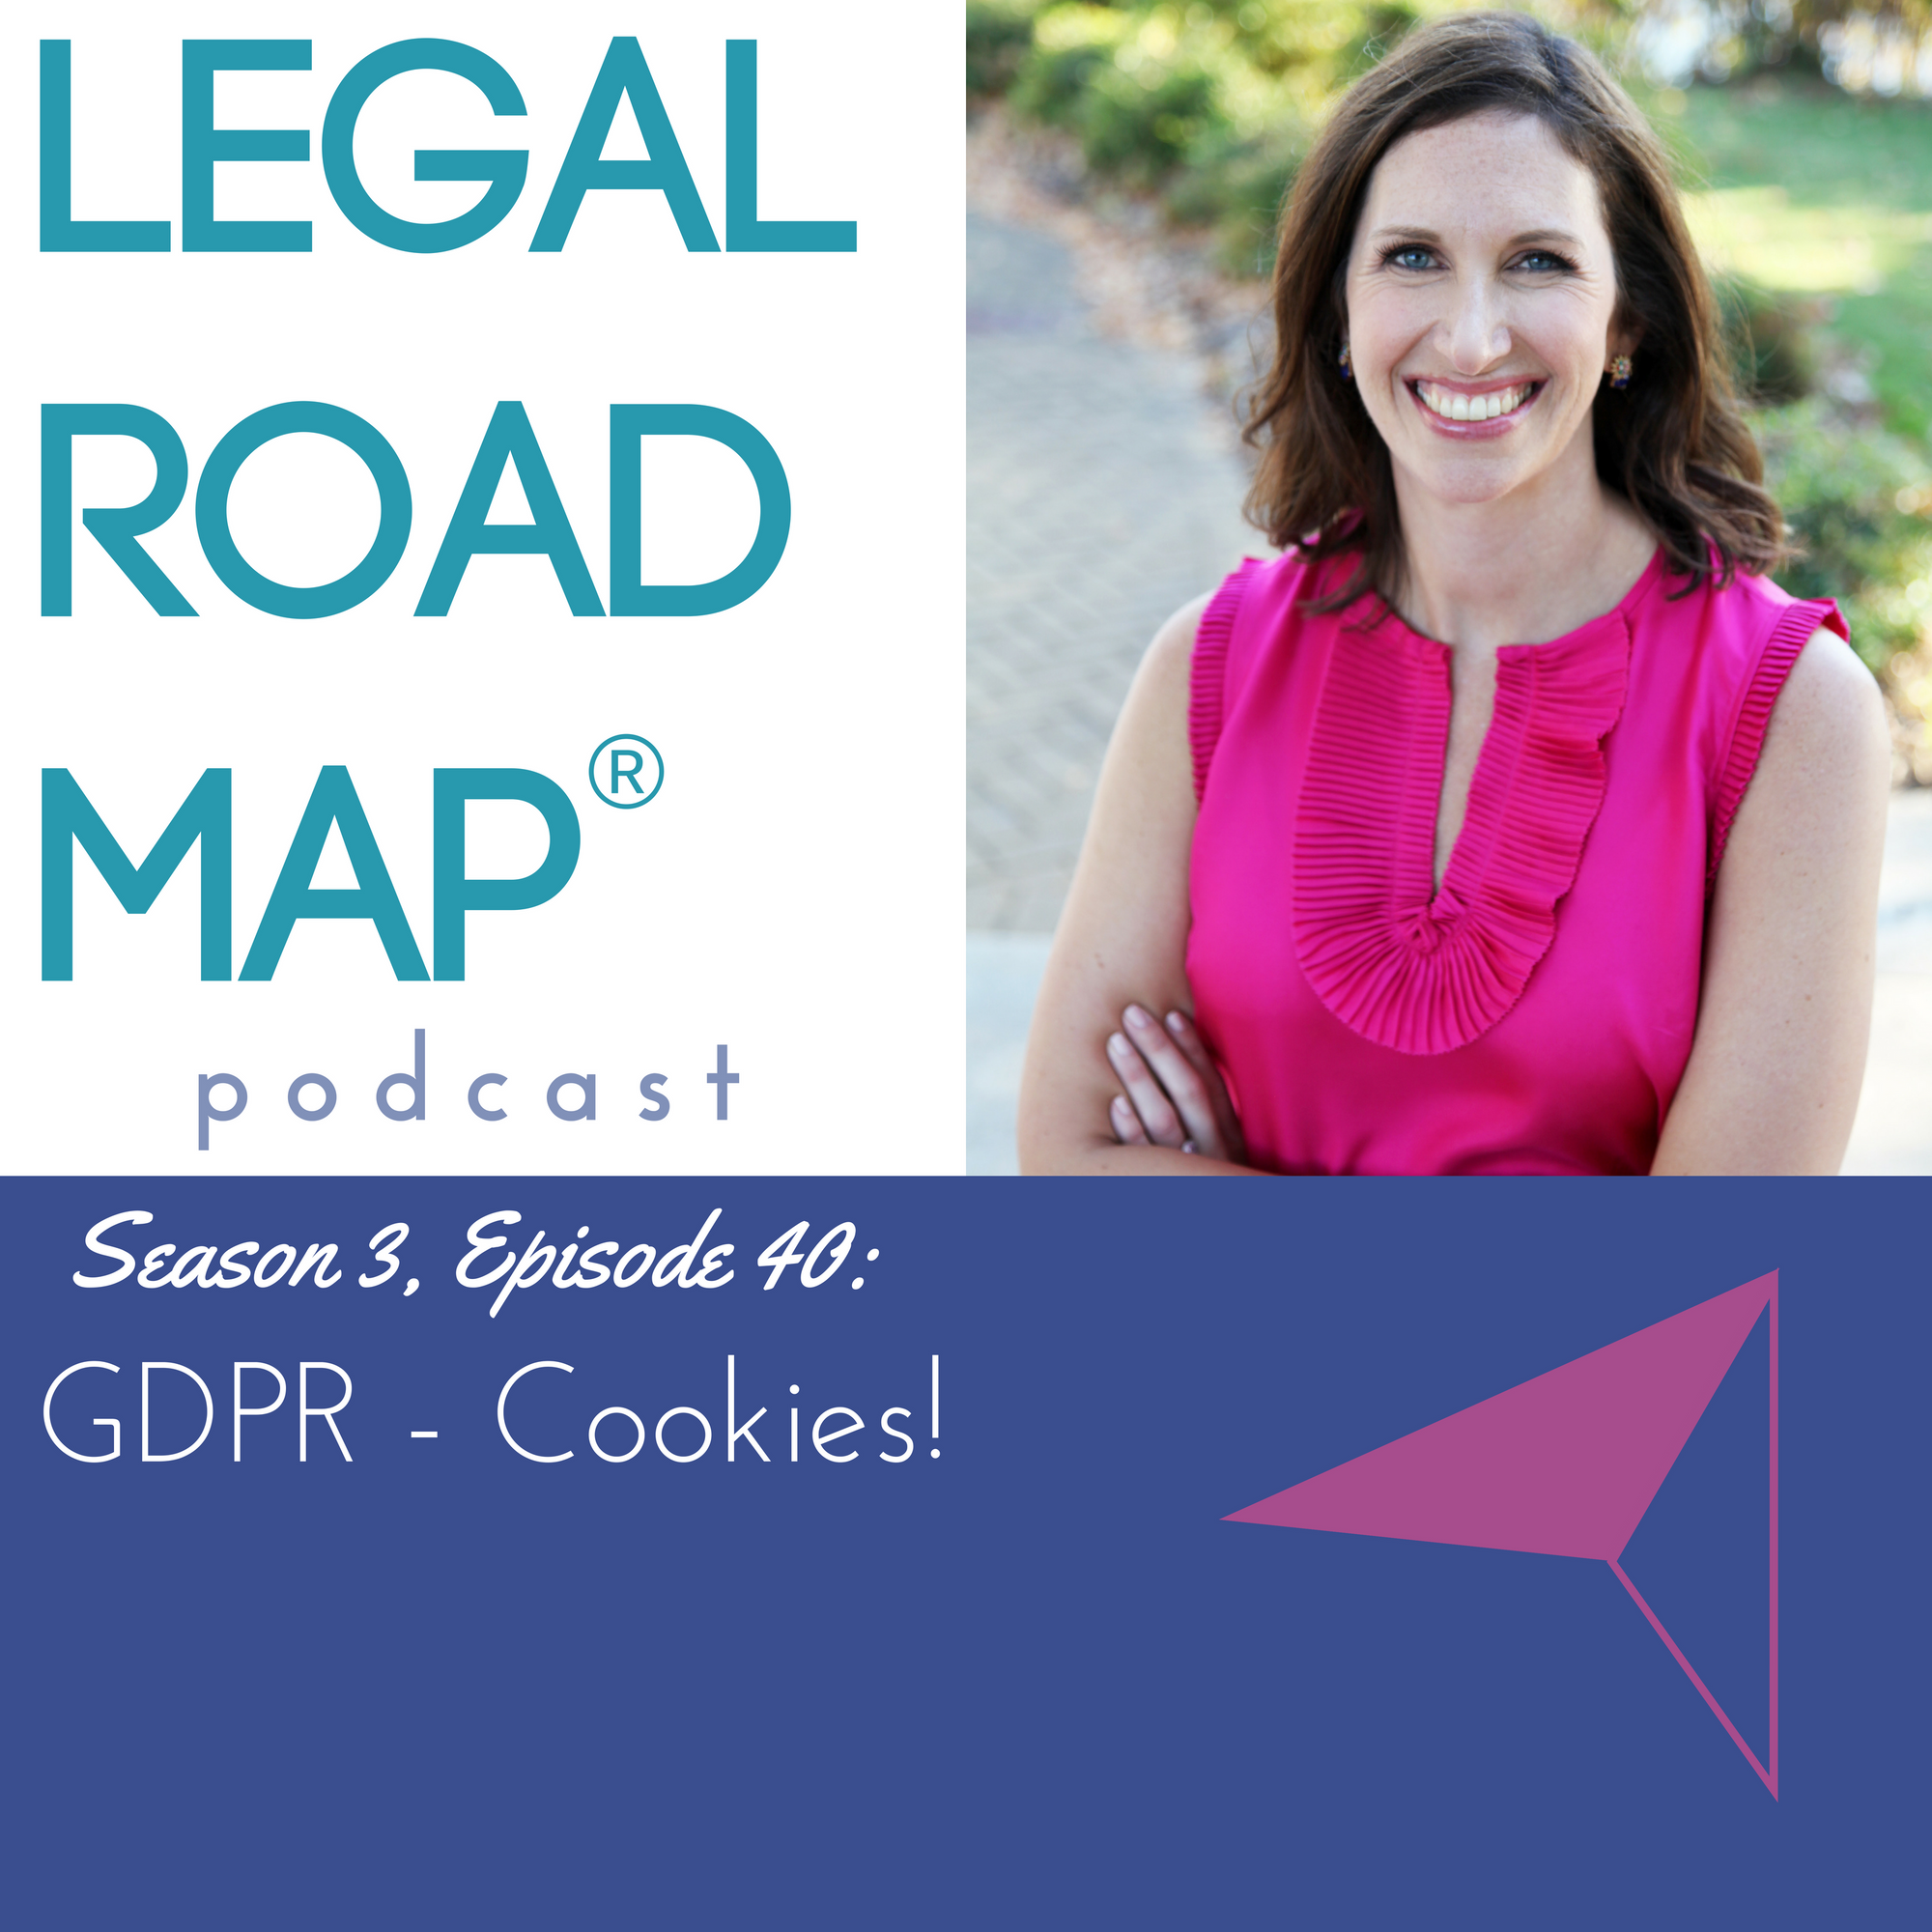 GDPR Mini-Training #3 (Legal Road Map® Podcast S3E40)